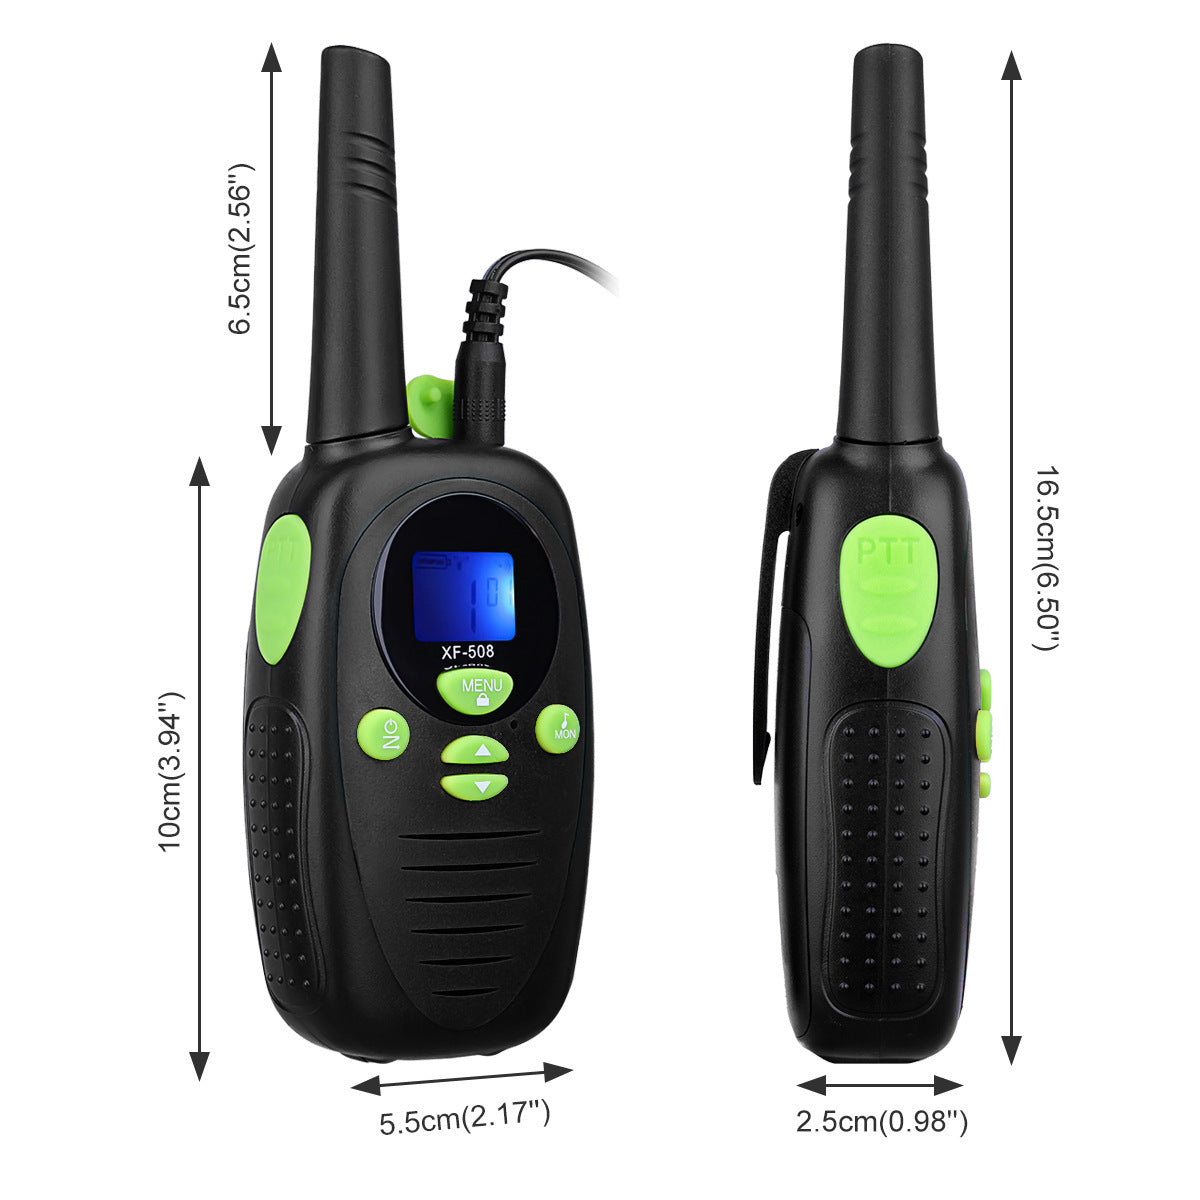 XF-508 Walkie-talkie Handheld 0.5w Wireless Children's Toy